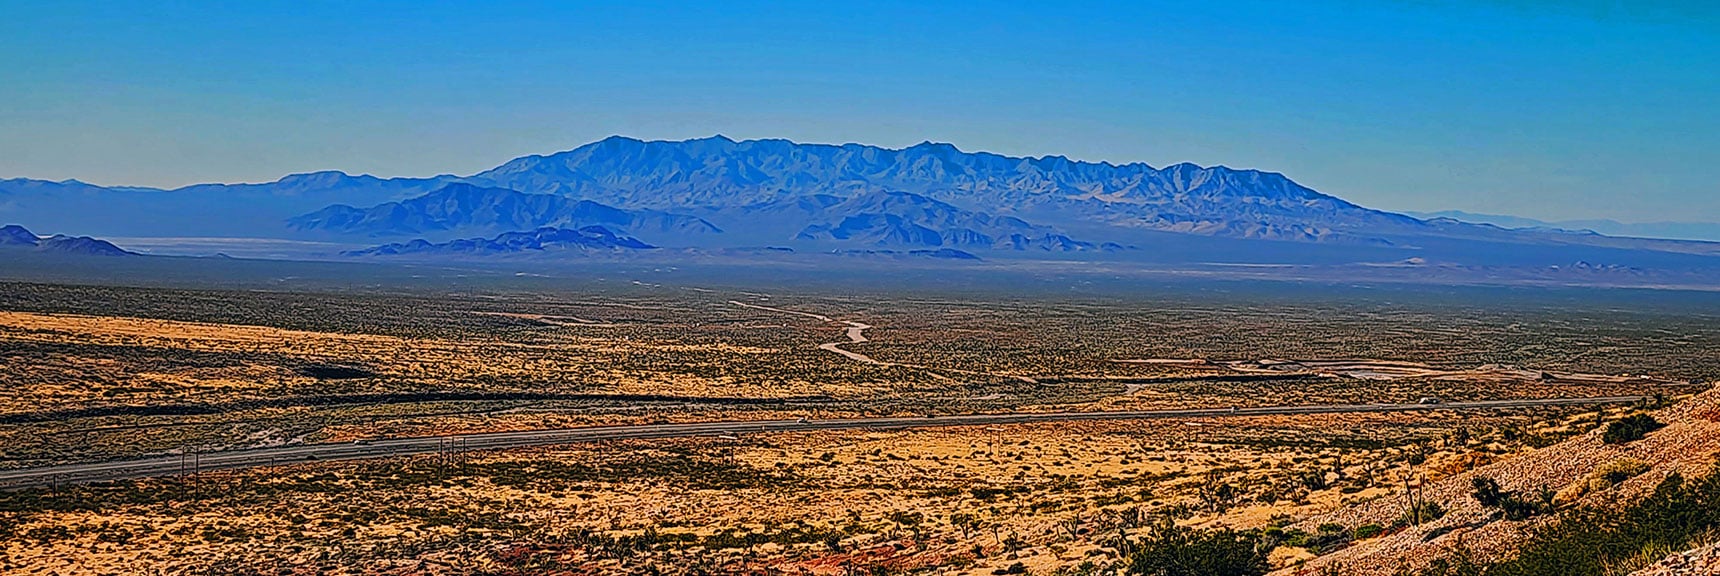 Rounding South Edge of Landmark Bluff. Nopah Range Come into View. | Landmark Bluff | Lovell Canyon, Nevada